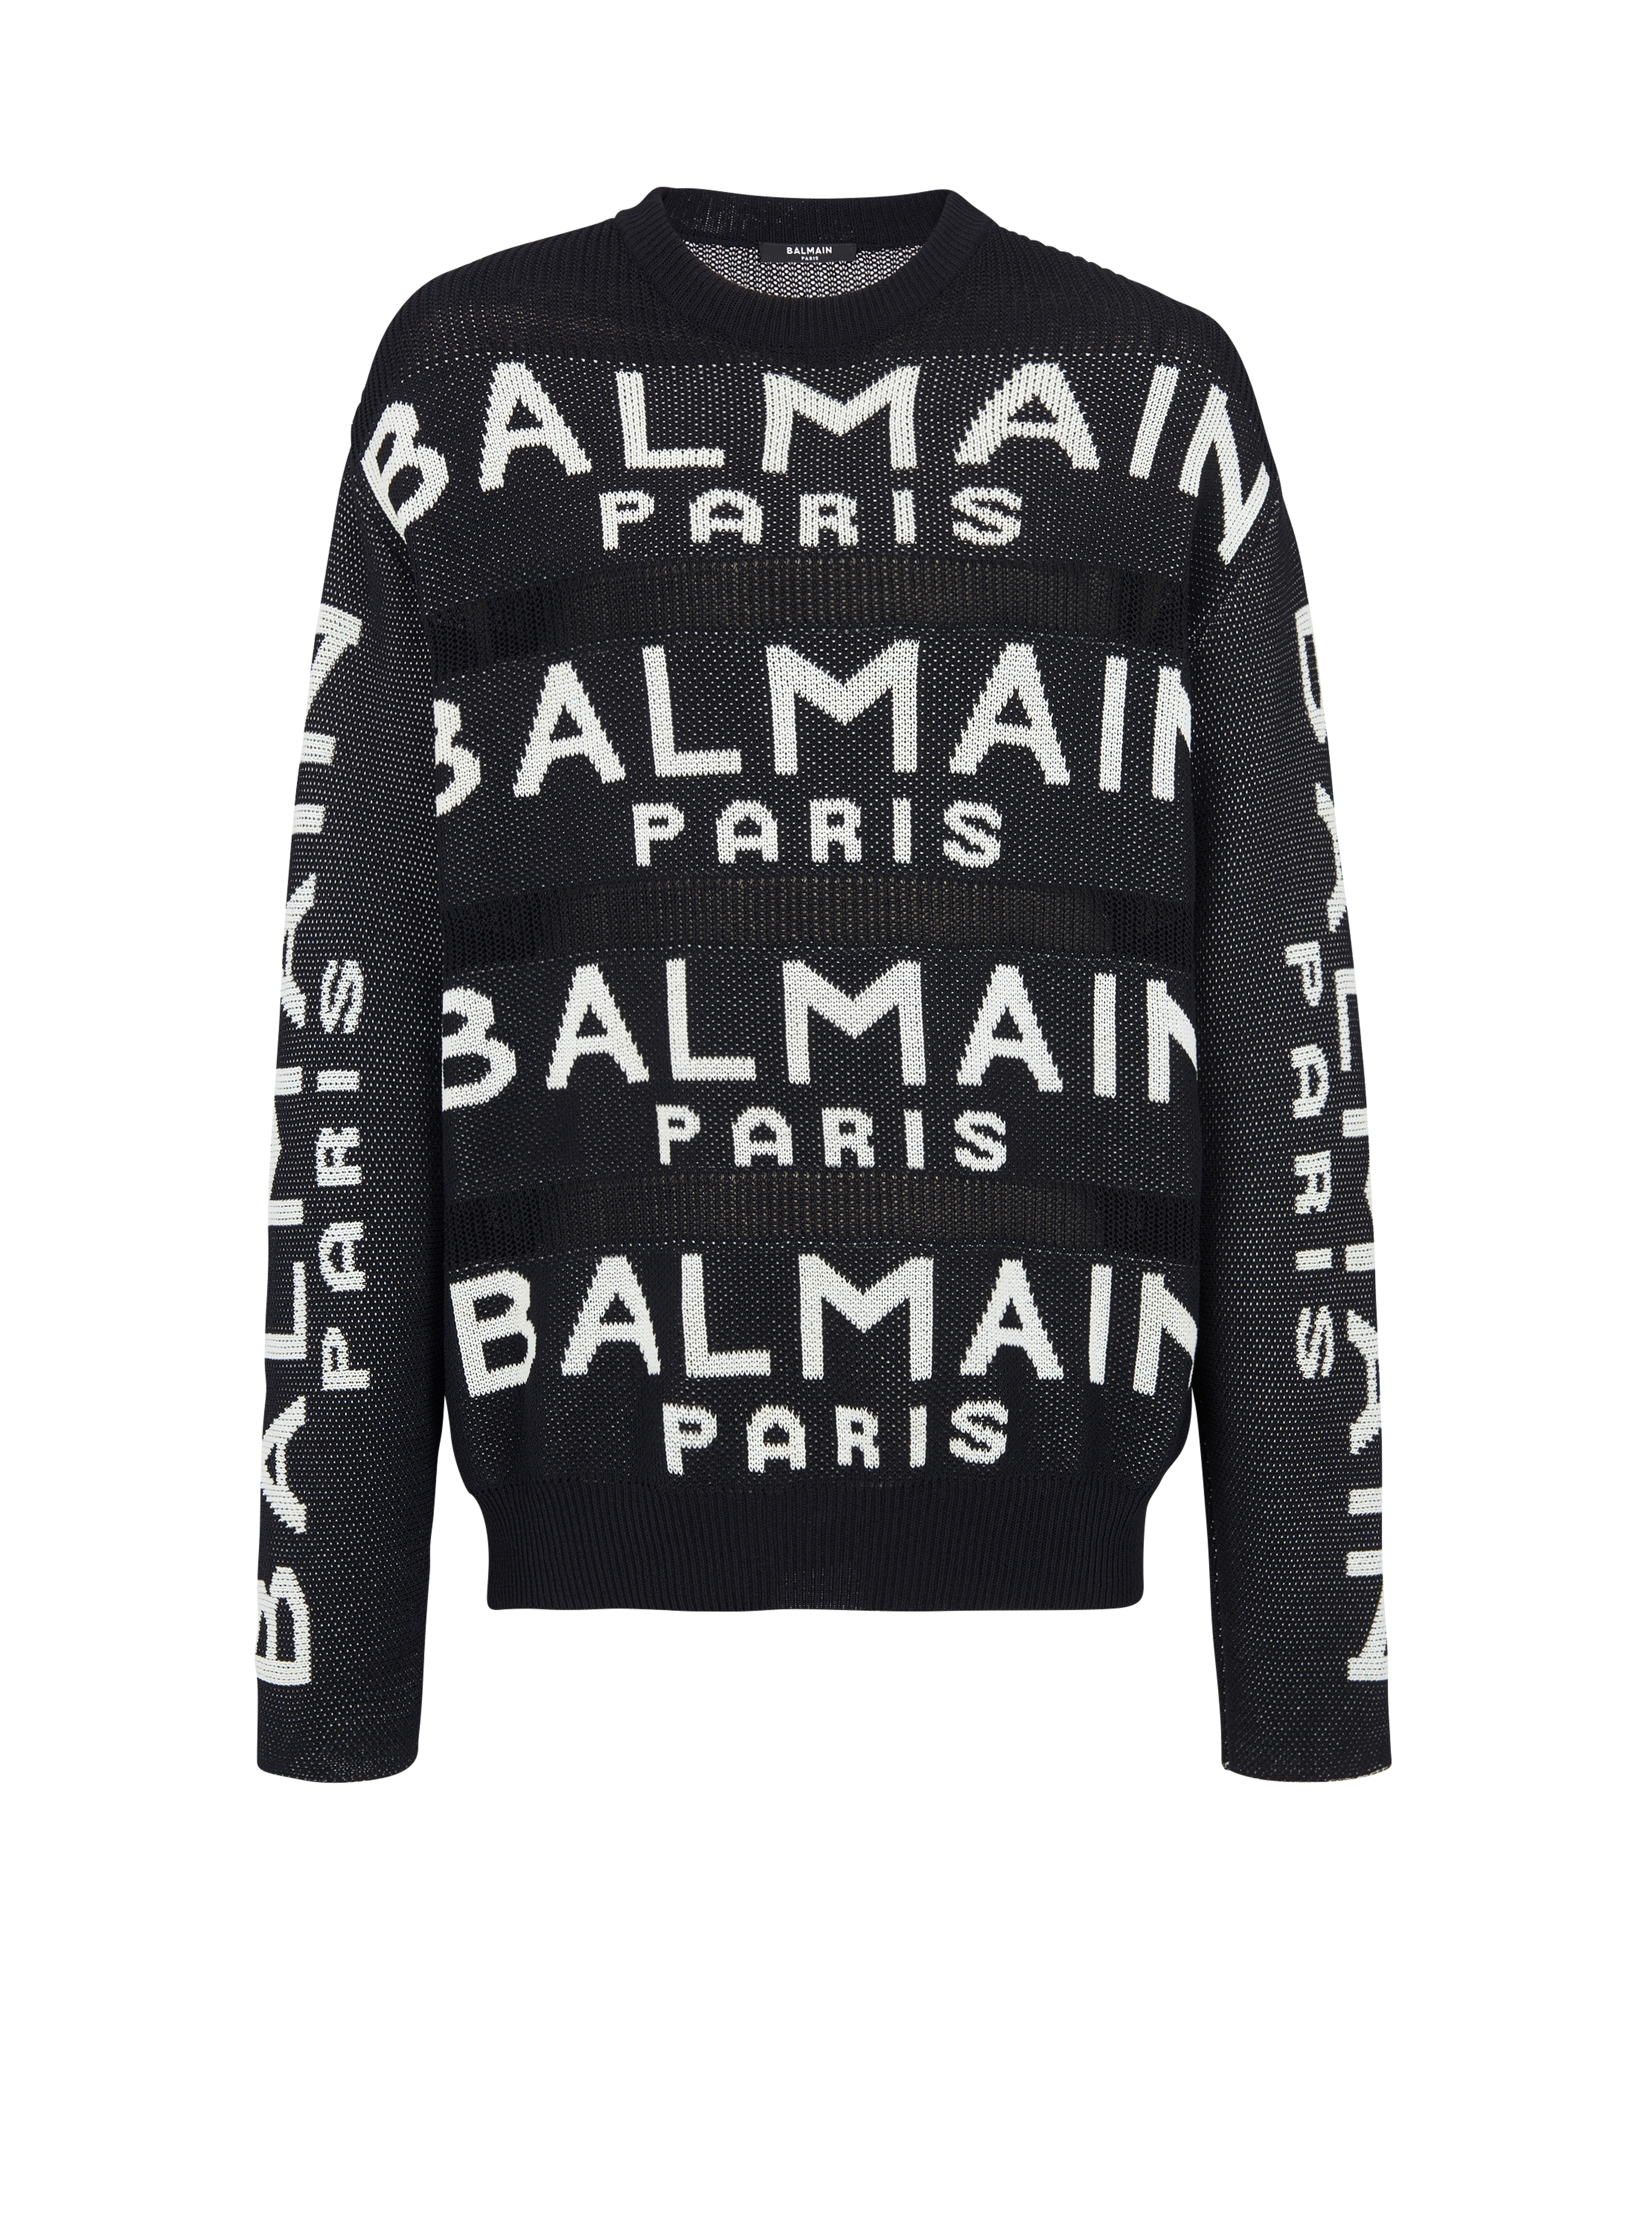 Balmain巴尔曼标志网眼针织套头衫, black